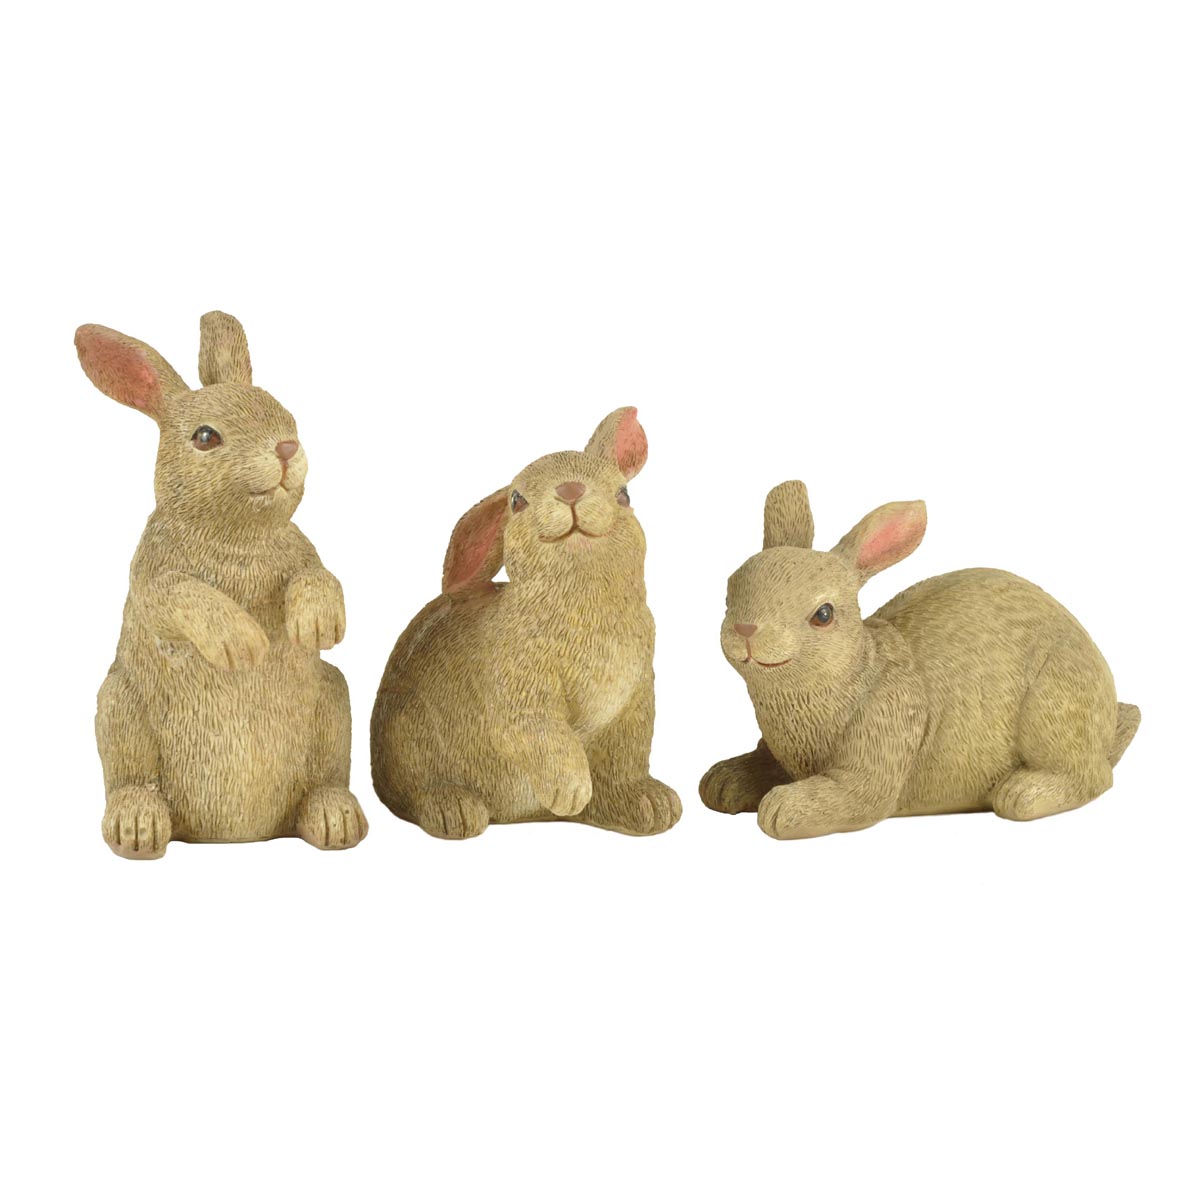 Ennas vintage easter bunny figurines handmade crafts home decor